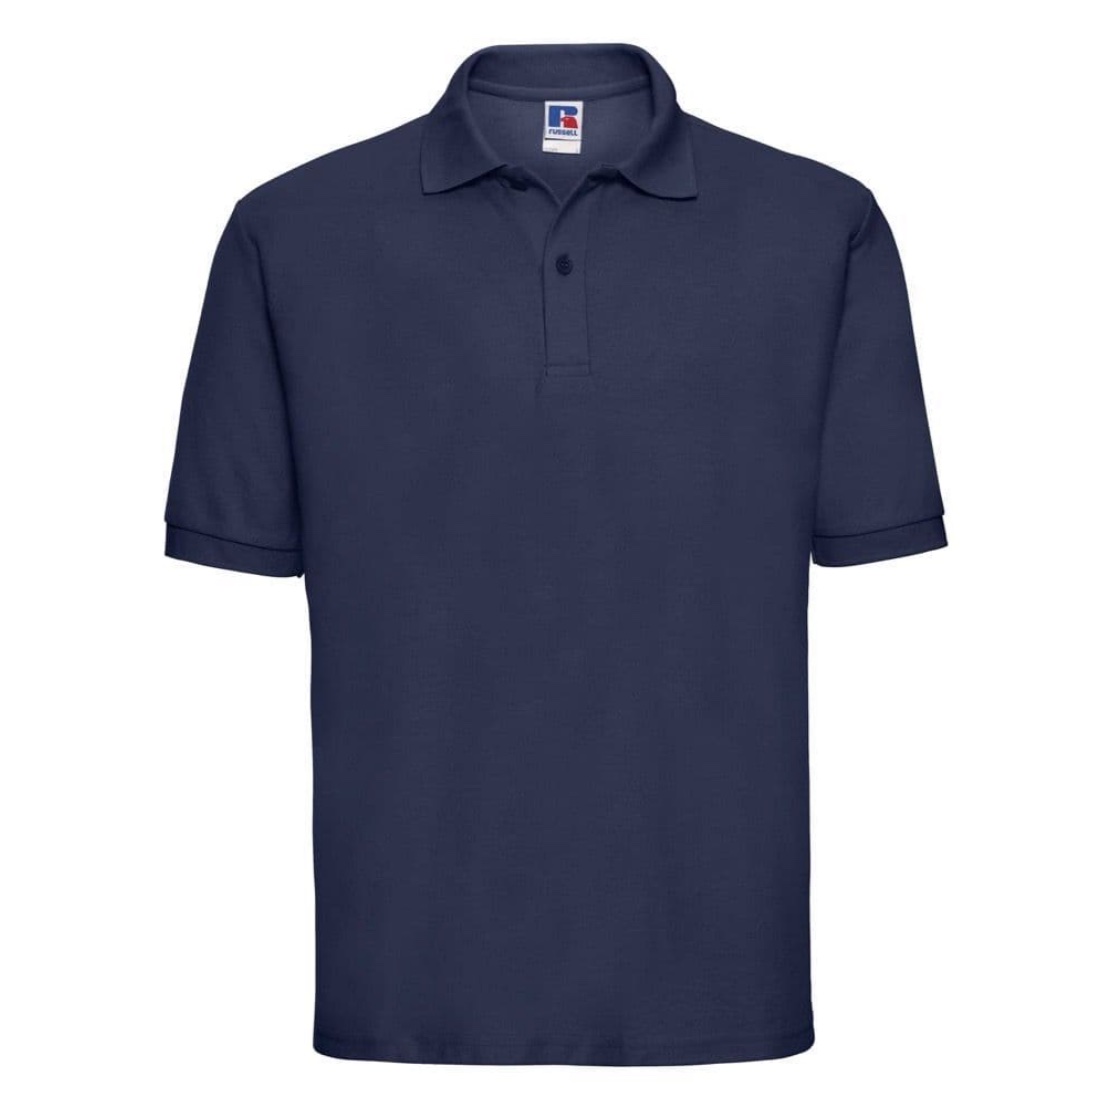 2 x Unisex Navy Blue Plain Polo Shirt, Short Sleeve 4-5 Y